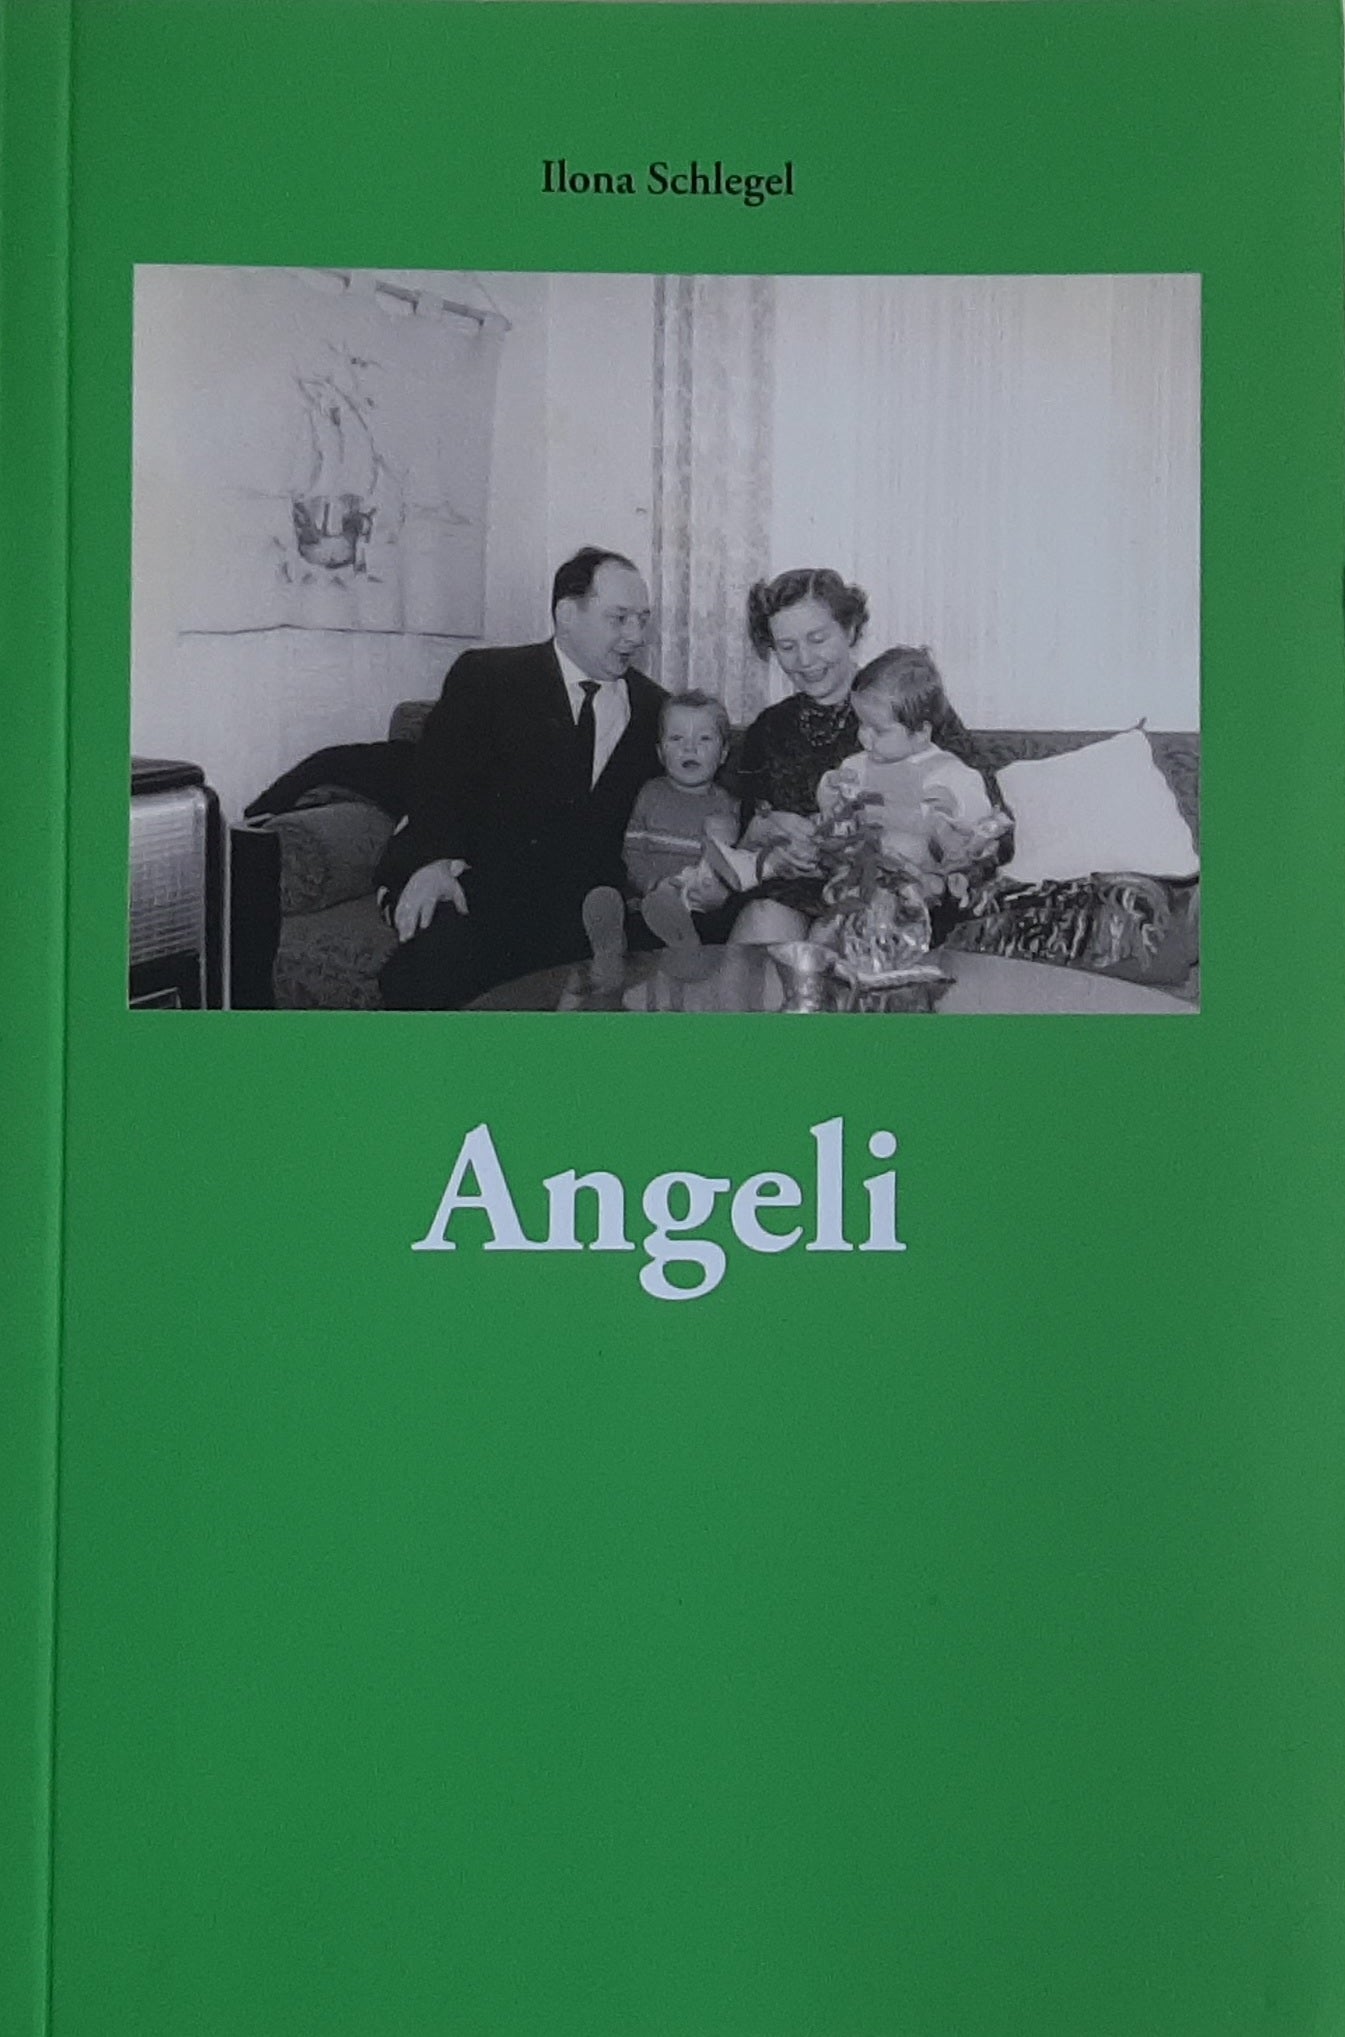 Angeli – ein Tagebuchroman